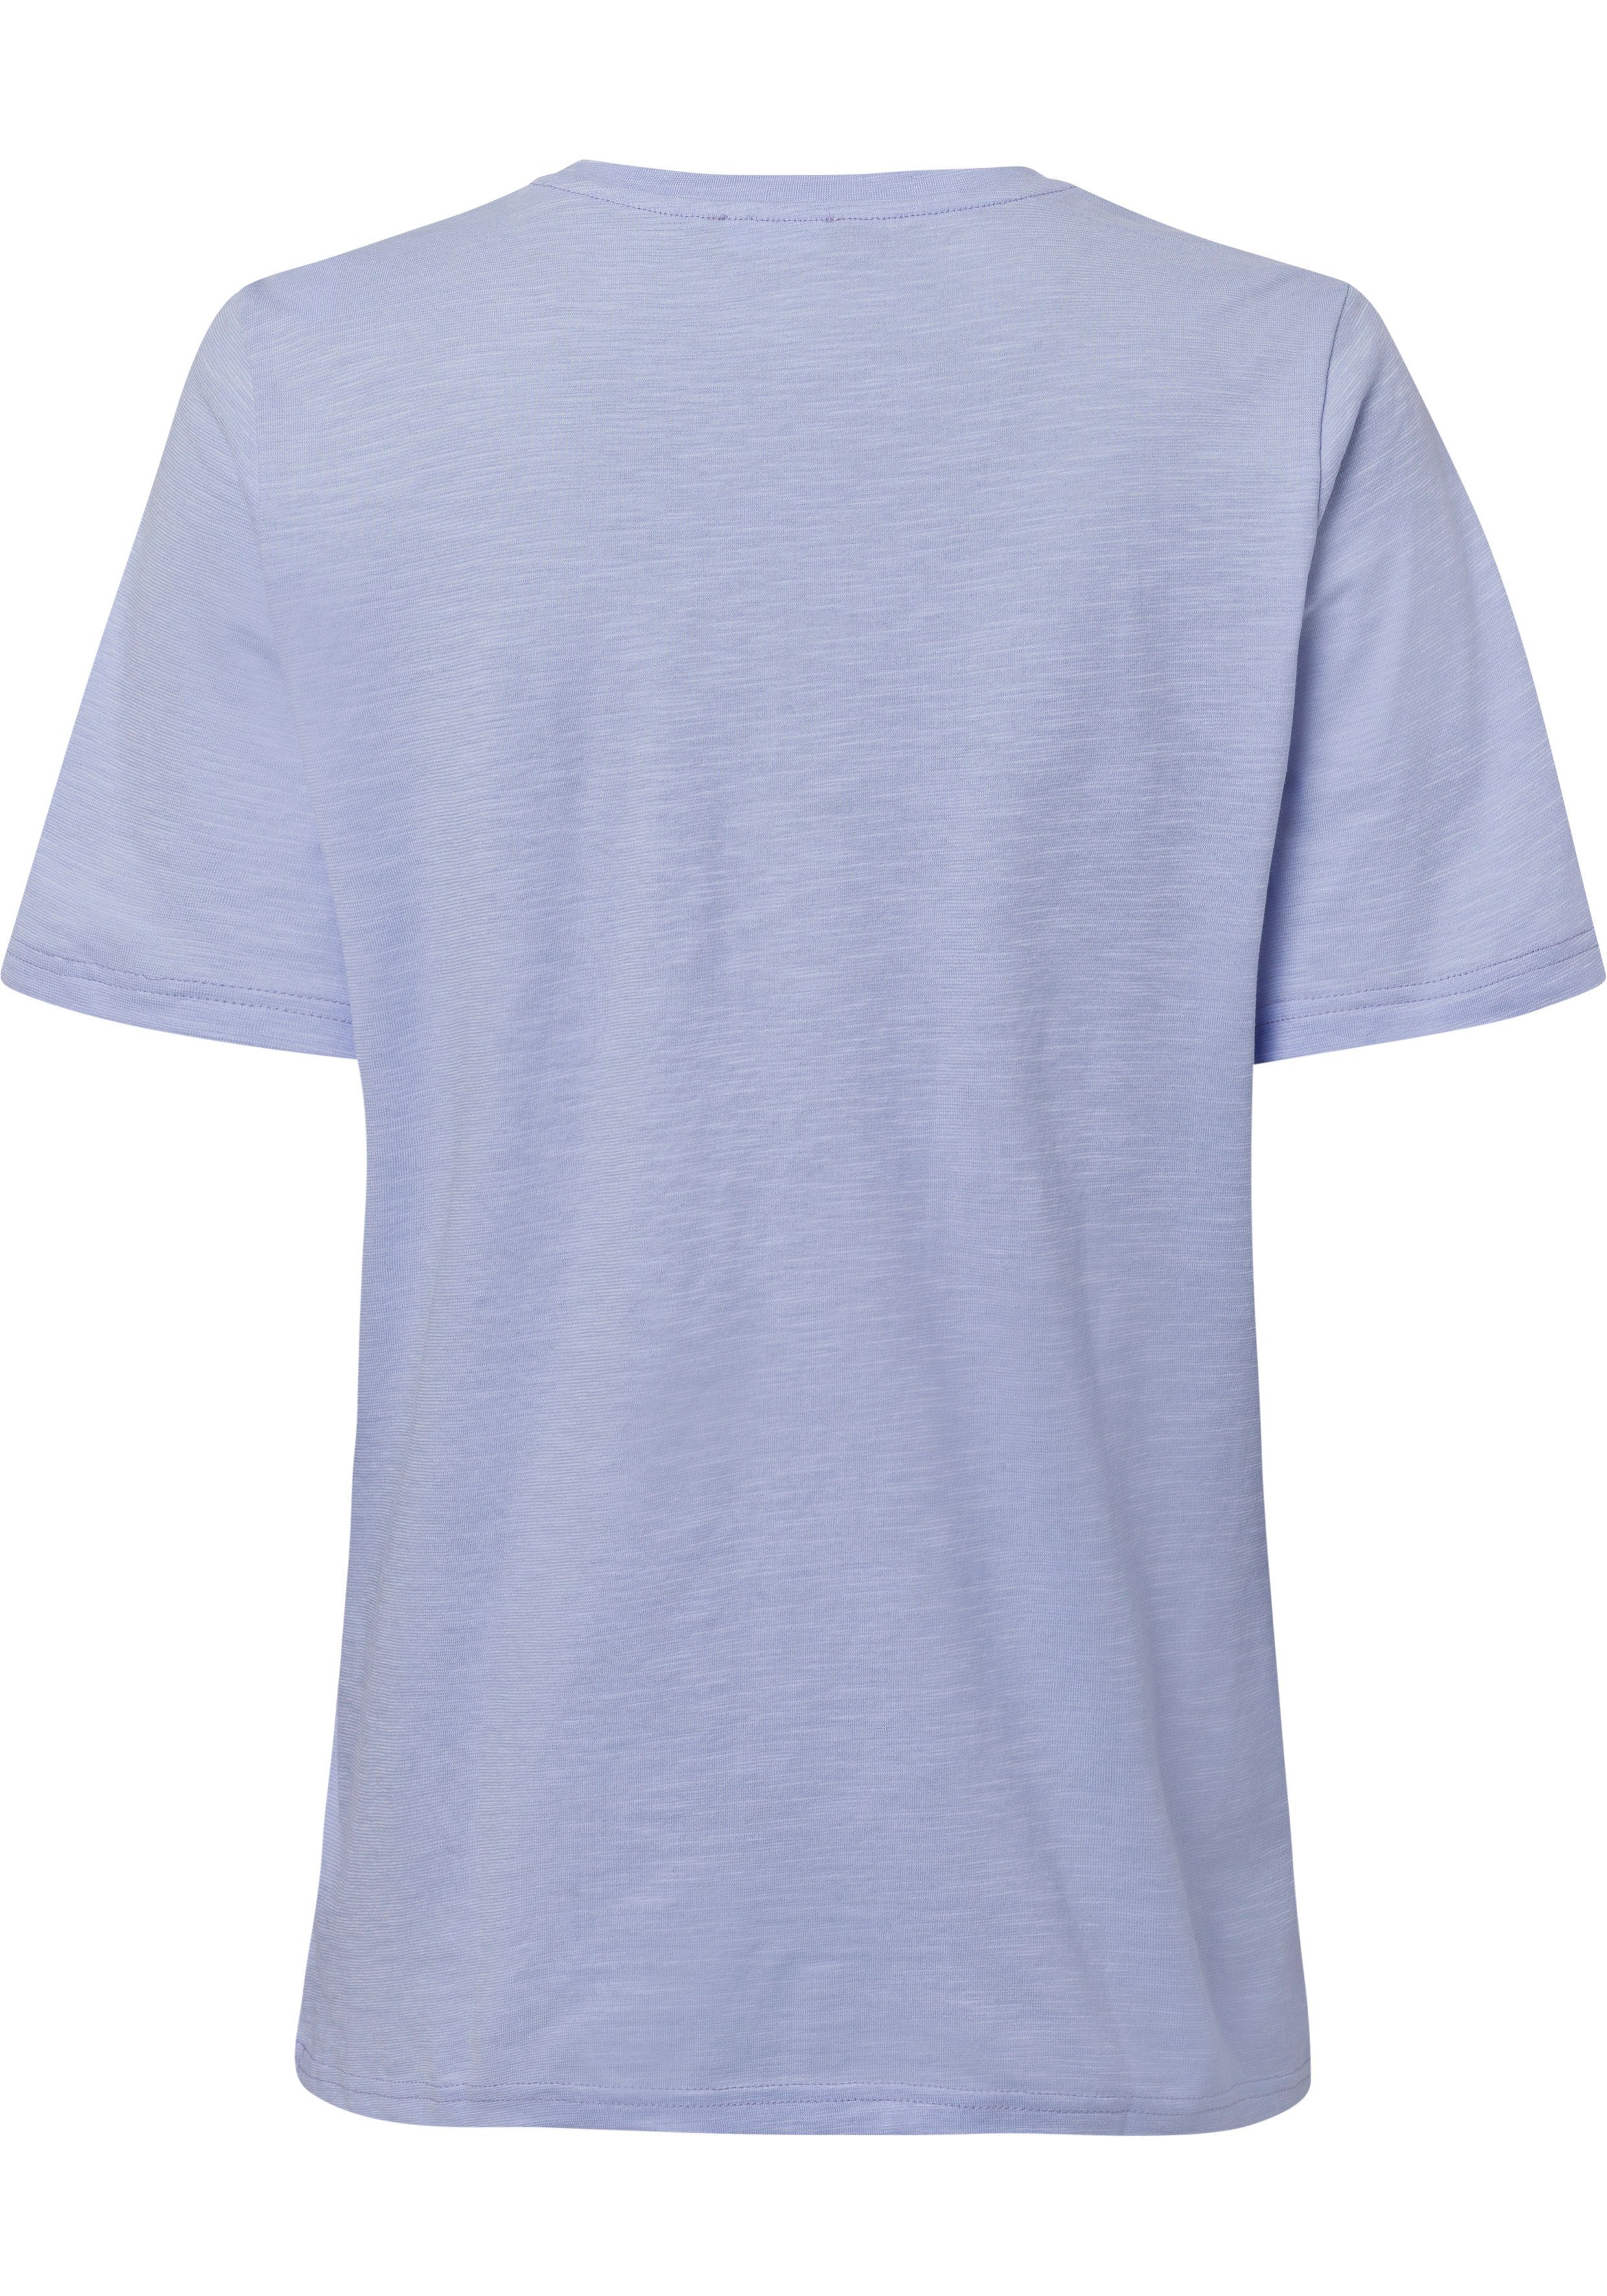 United Colors of Benetton Basic-Optik cleaner in flieder T-Shirt